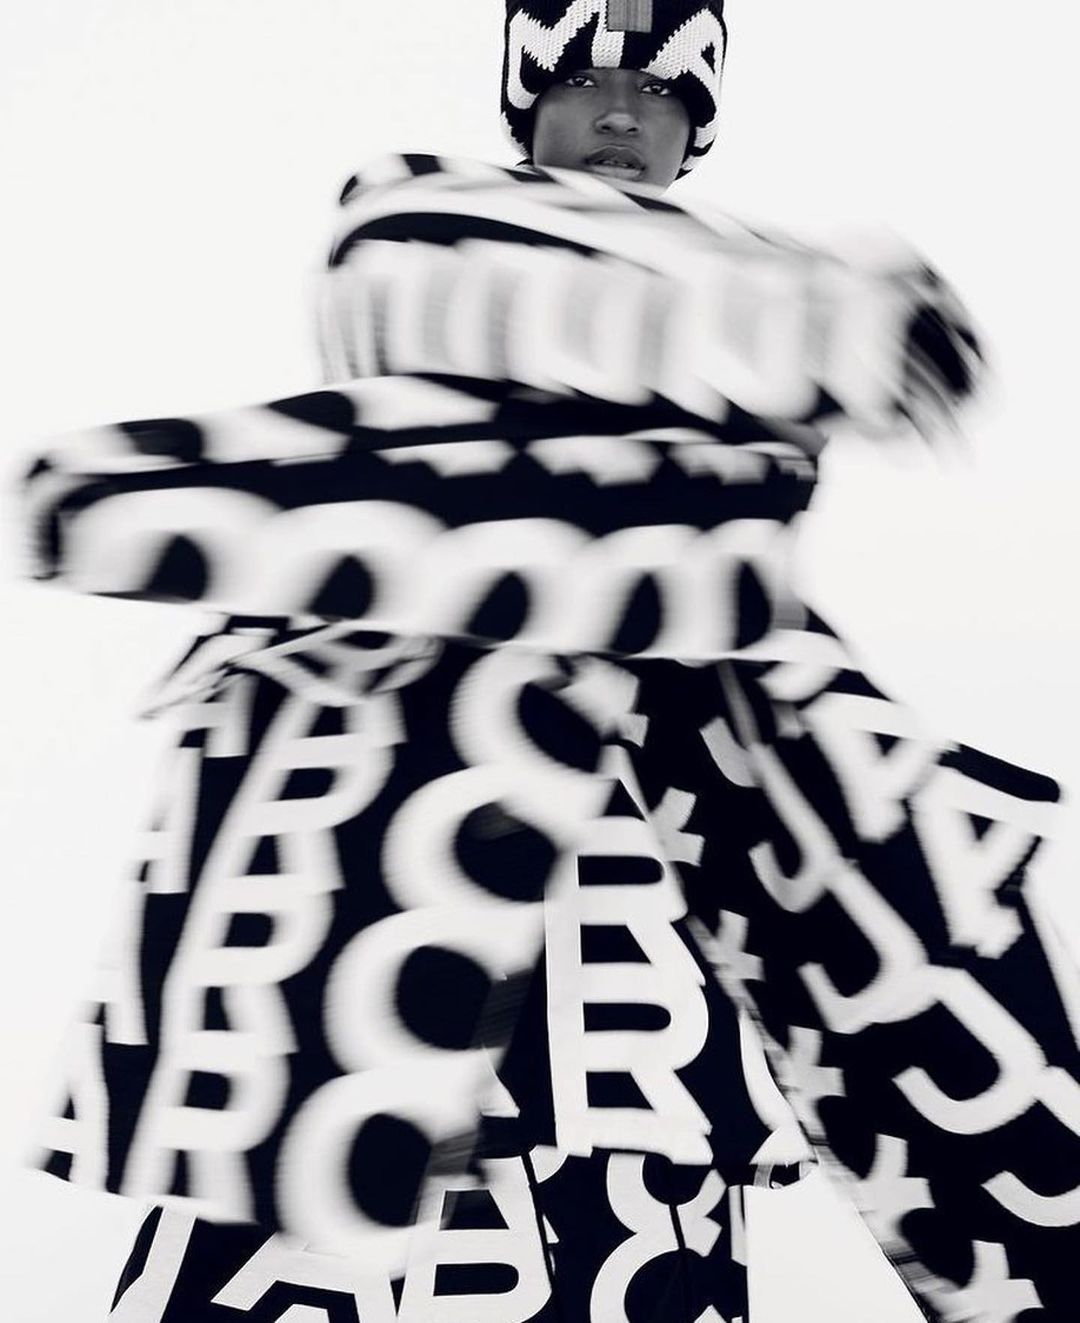 Select Model Milano - @ALIIIETTT for Dazed Magazine September Issue 🌺 @ dazed Shot by @rafaelpavarotti_ Fashion Editor/ Stylist @ibkamara Hair  @alipirzadeh Make-up @chiaolihsu Casting Director @mischanot #AlietSarah # Dazed #SelectmodelMilano